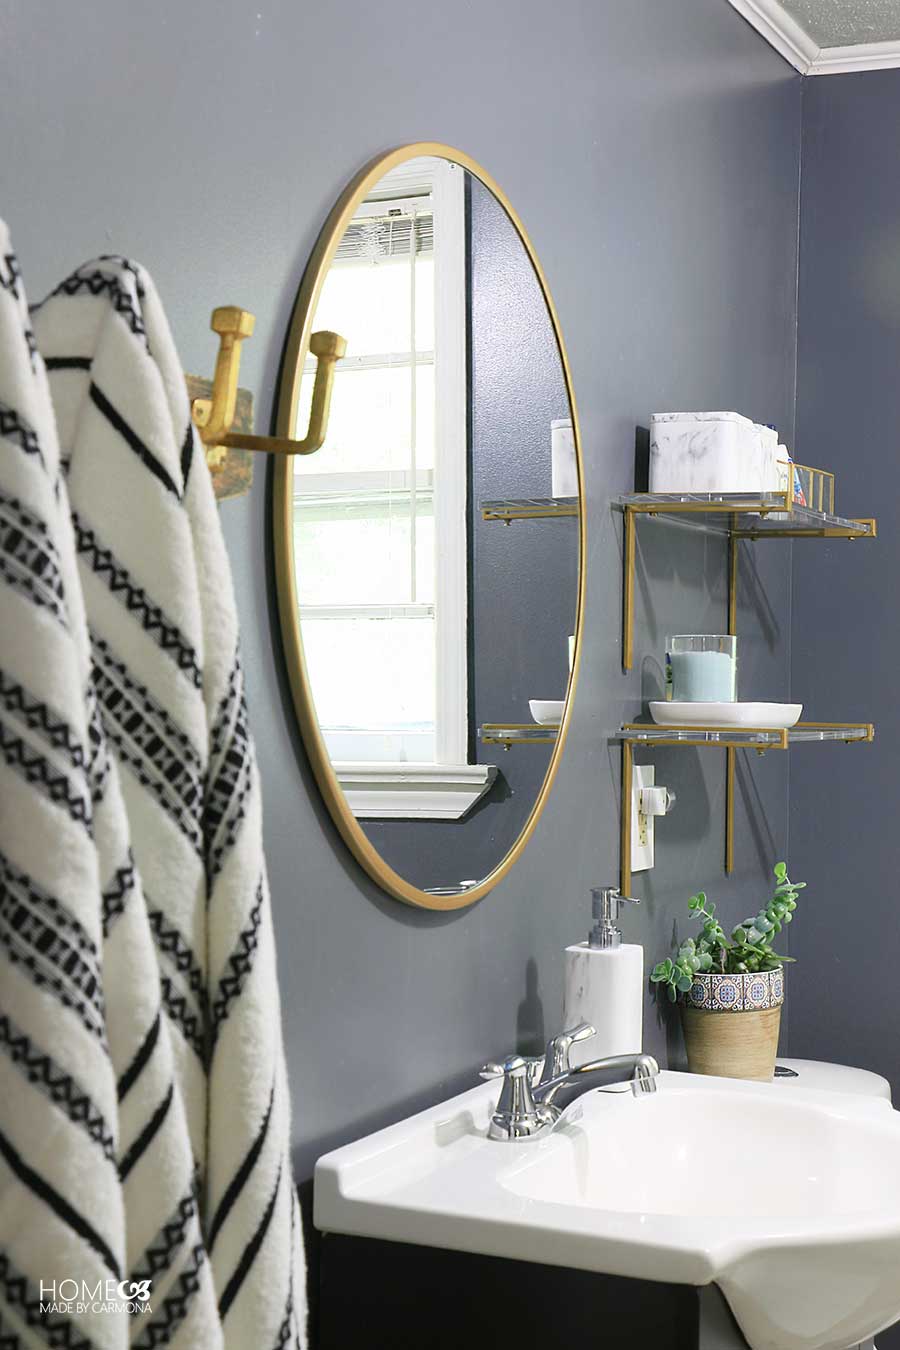 Bathroom mirror sink towels and shelves